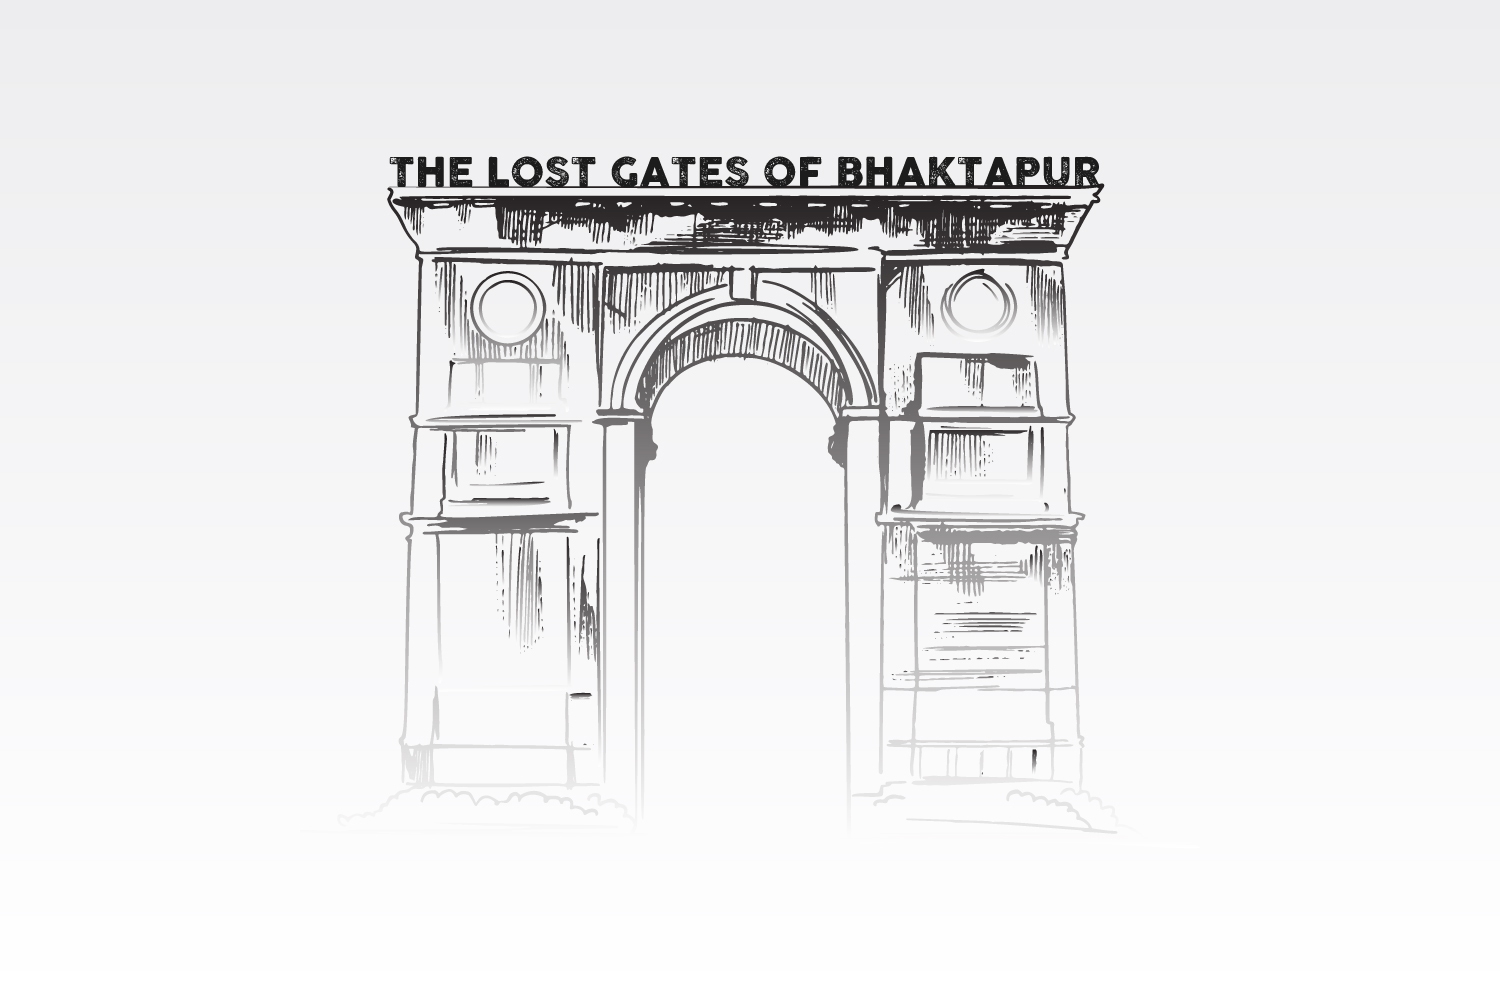 The Lost Gates of Bhaktapur image